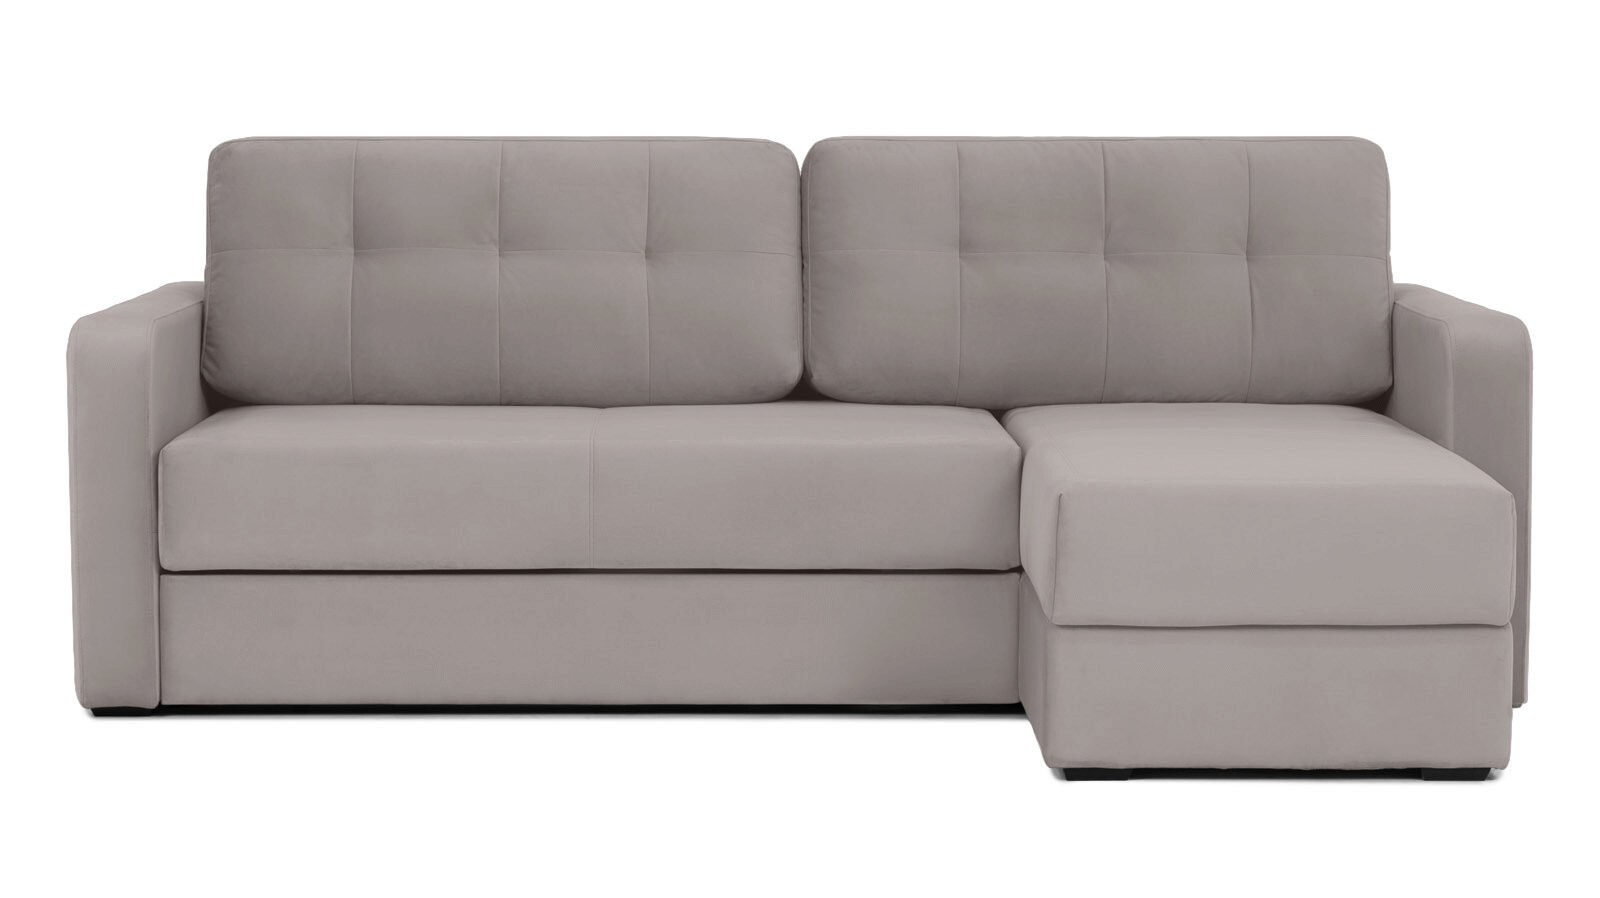 Угловой диван Loko Pro с широкими подлокотниками, с мягким матрасом